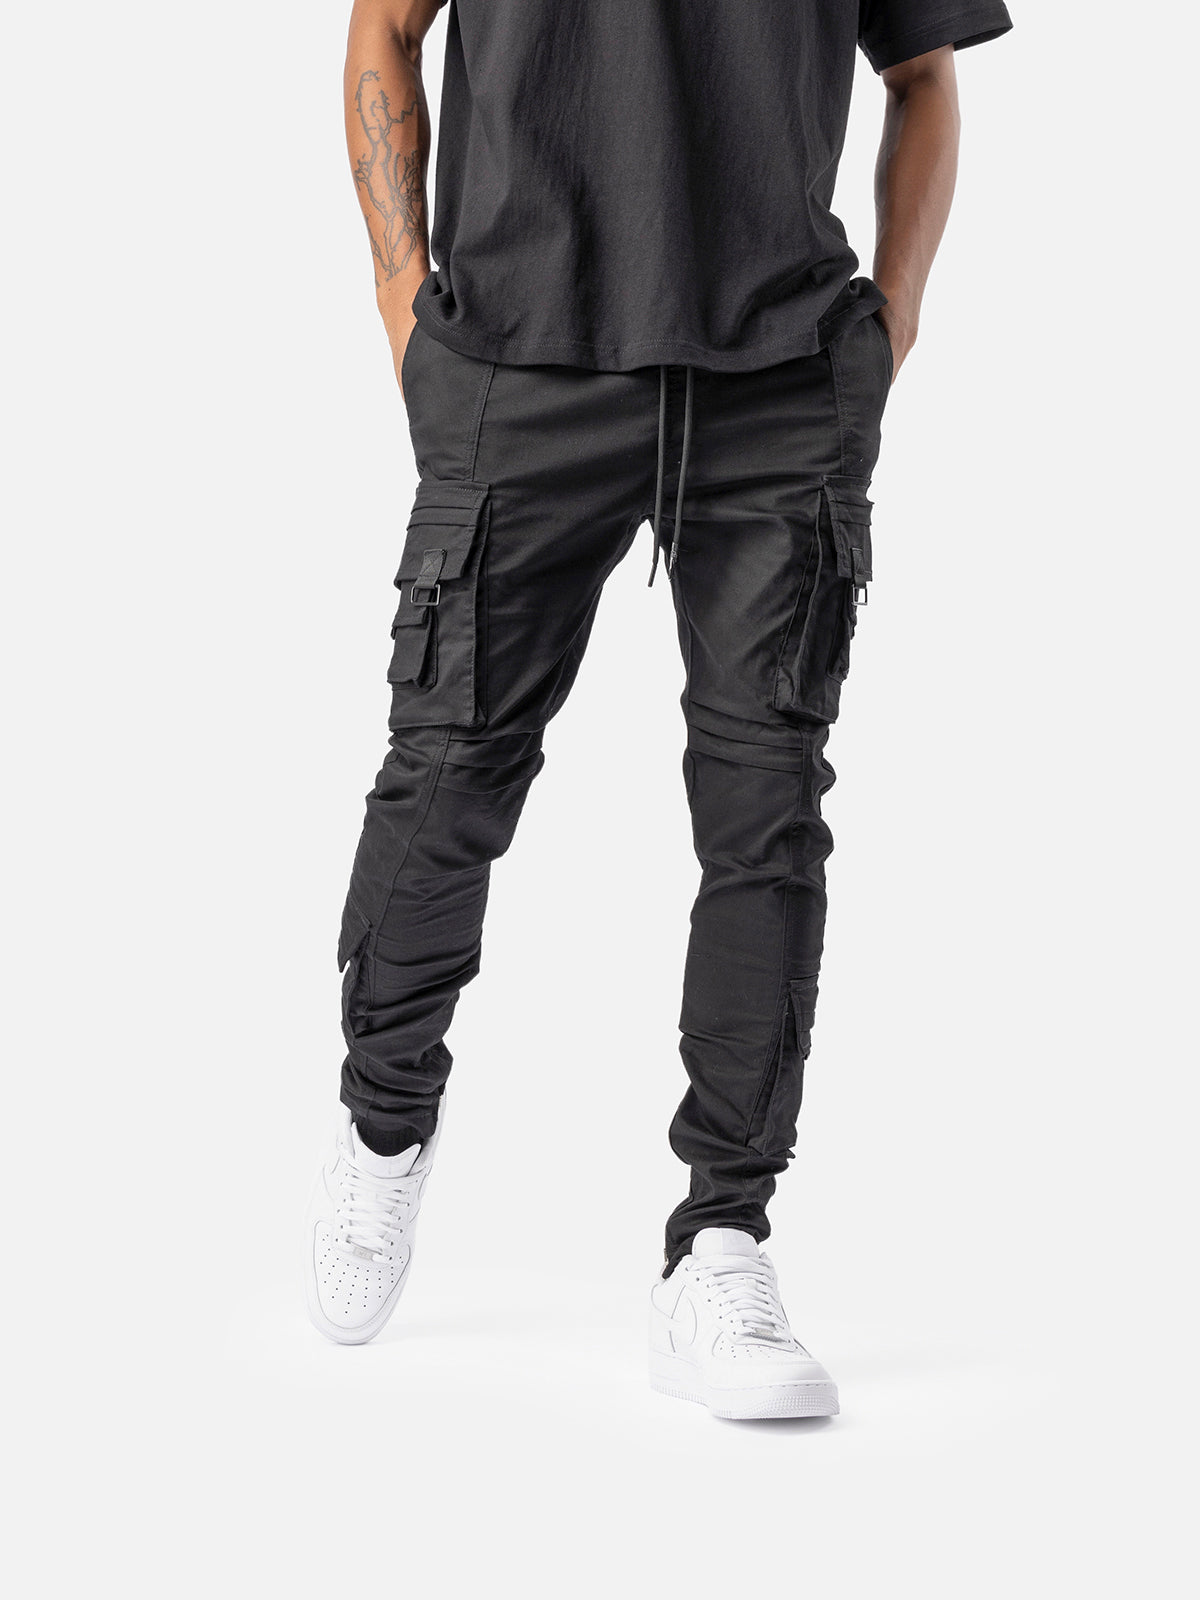 Cargo Pants for Men Mid-waist With Multi-pocket Men's Zip Fit Solid Cargo  Pants Men's pants (Black, 36) - Walmart.com